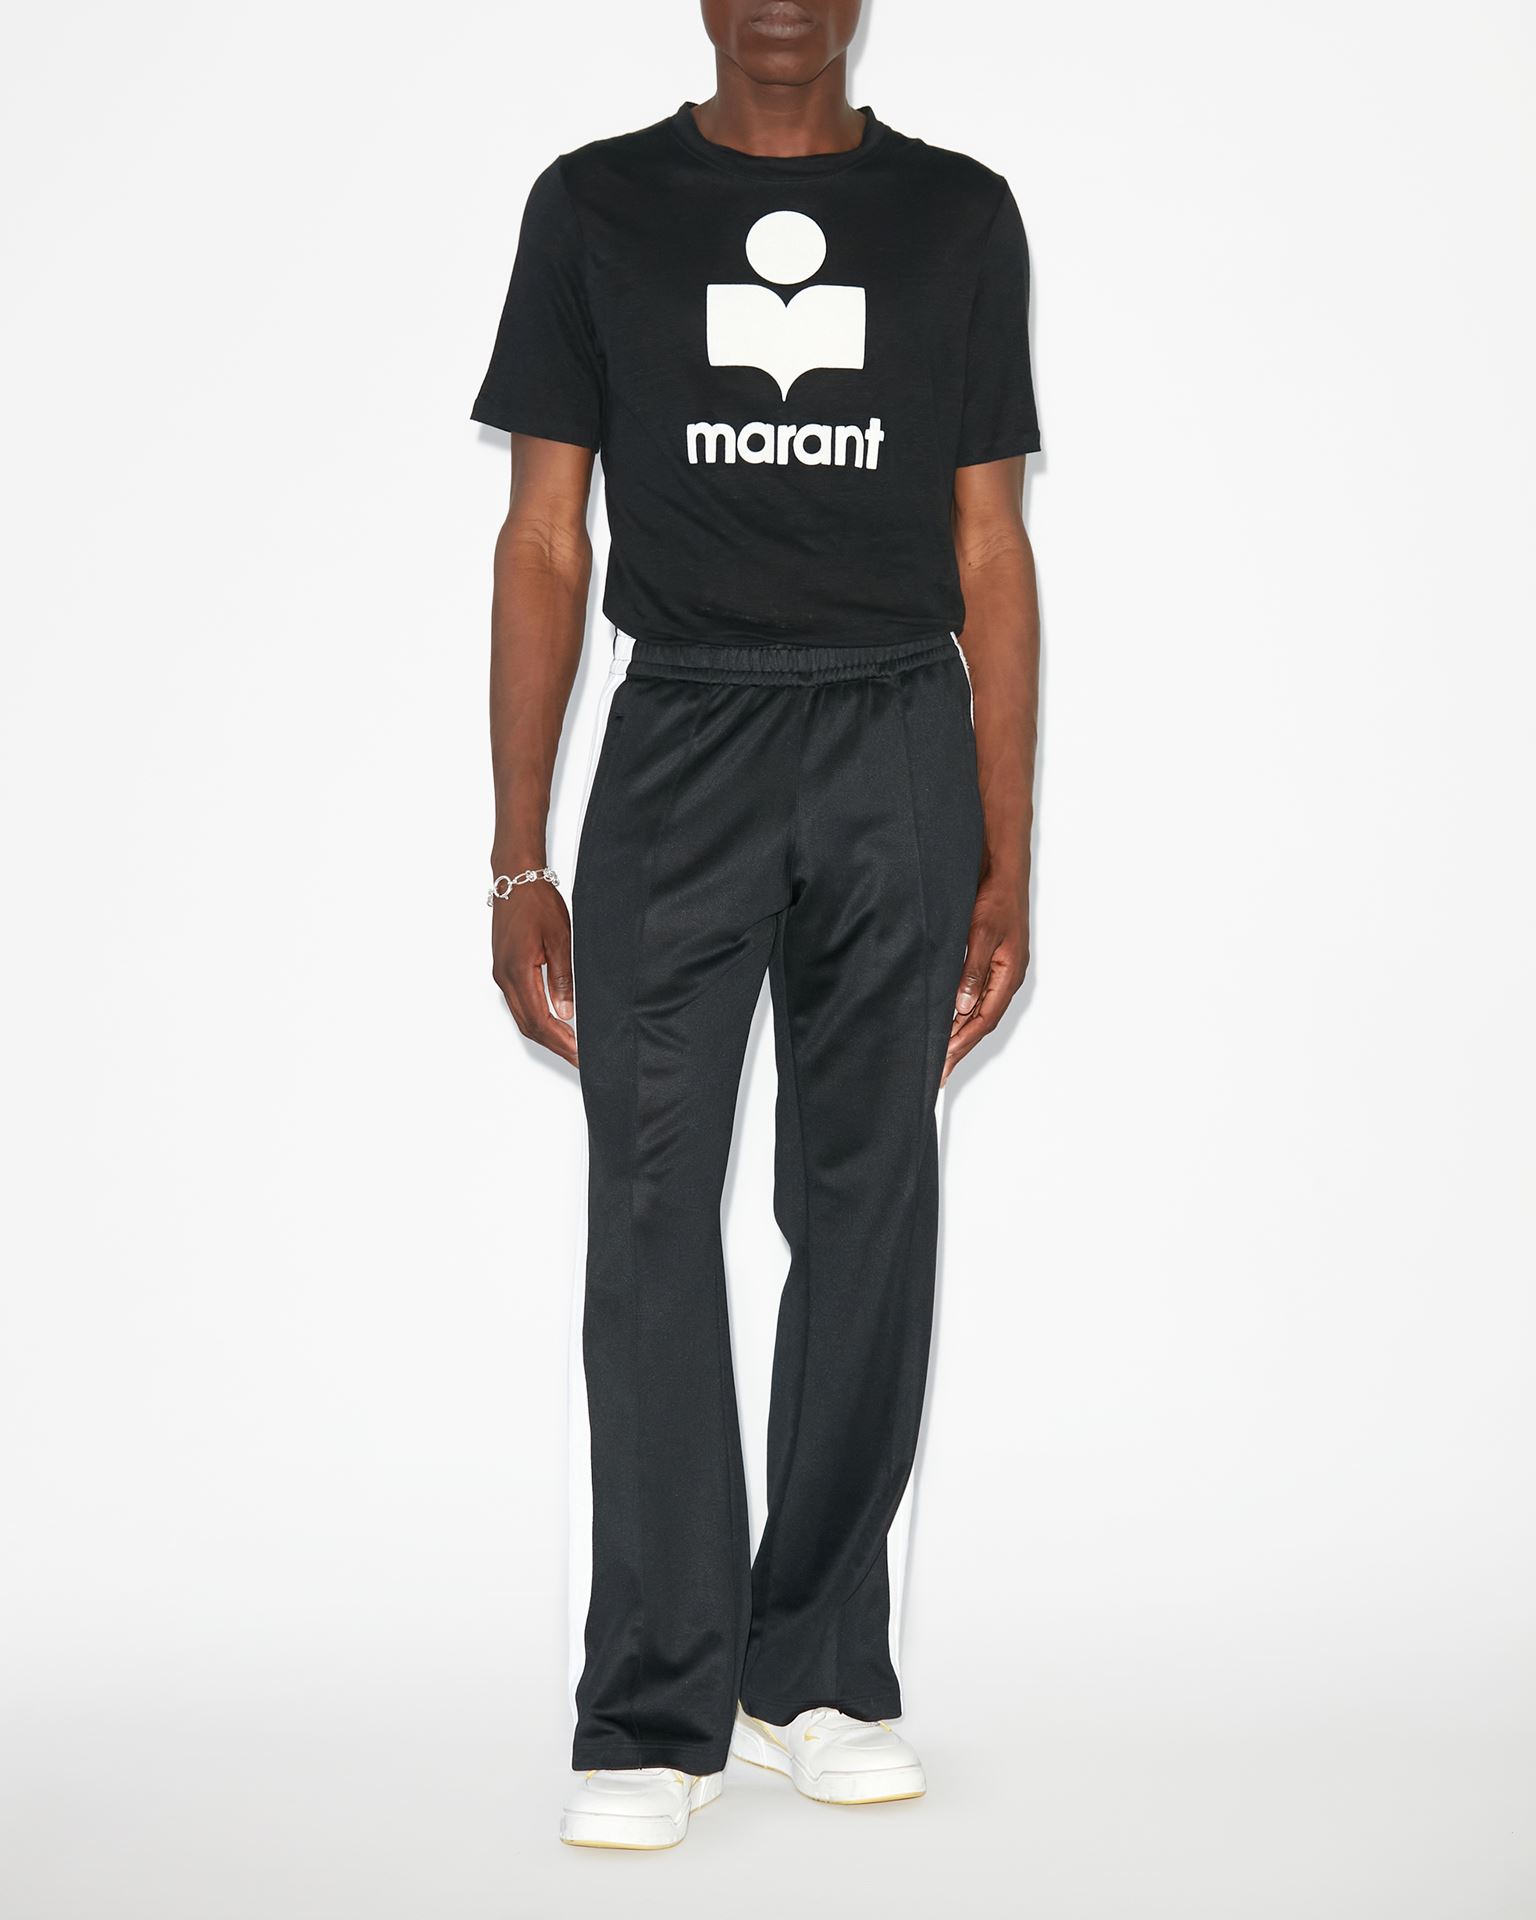 Isabel Marant, Karman Logo Tee-shirt - Men - Black